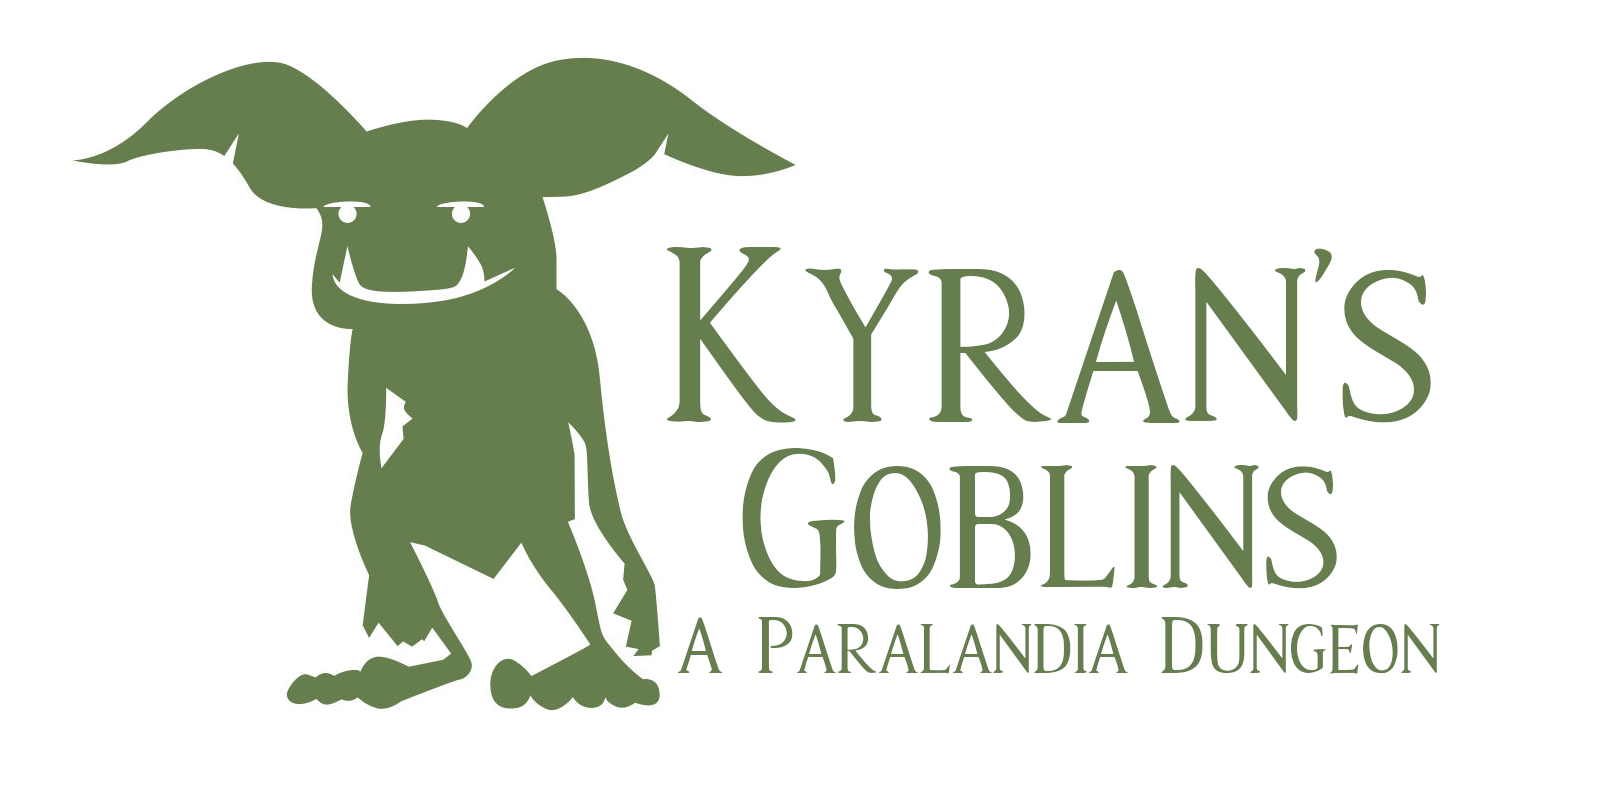 Kyran's Goblins